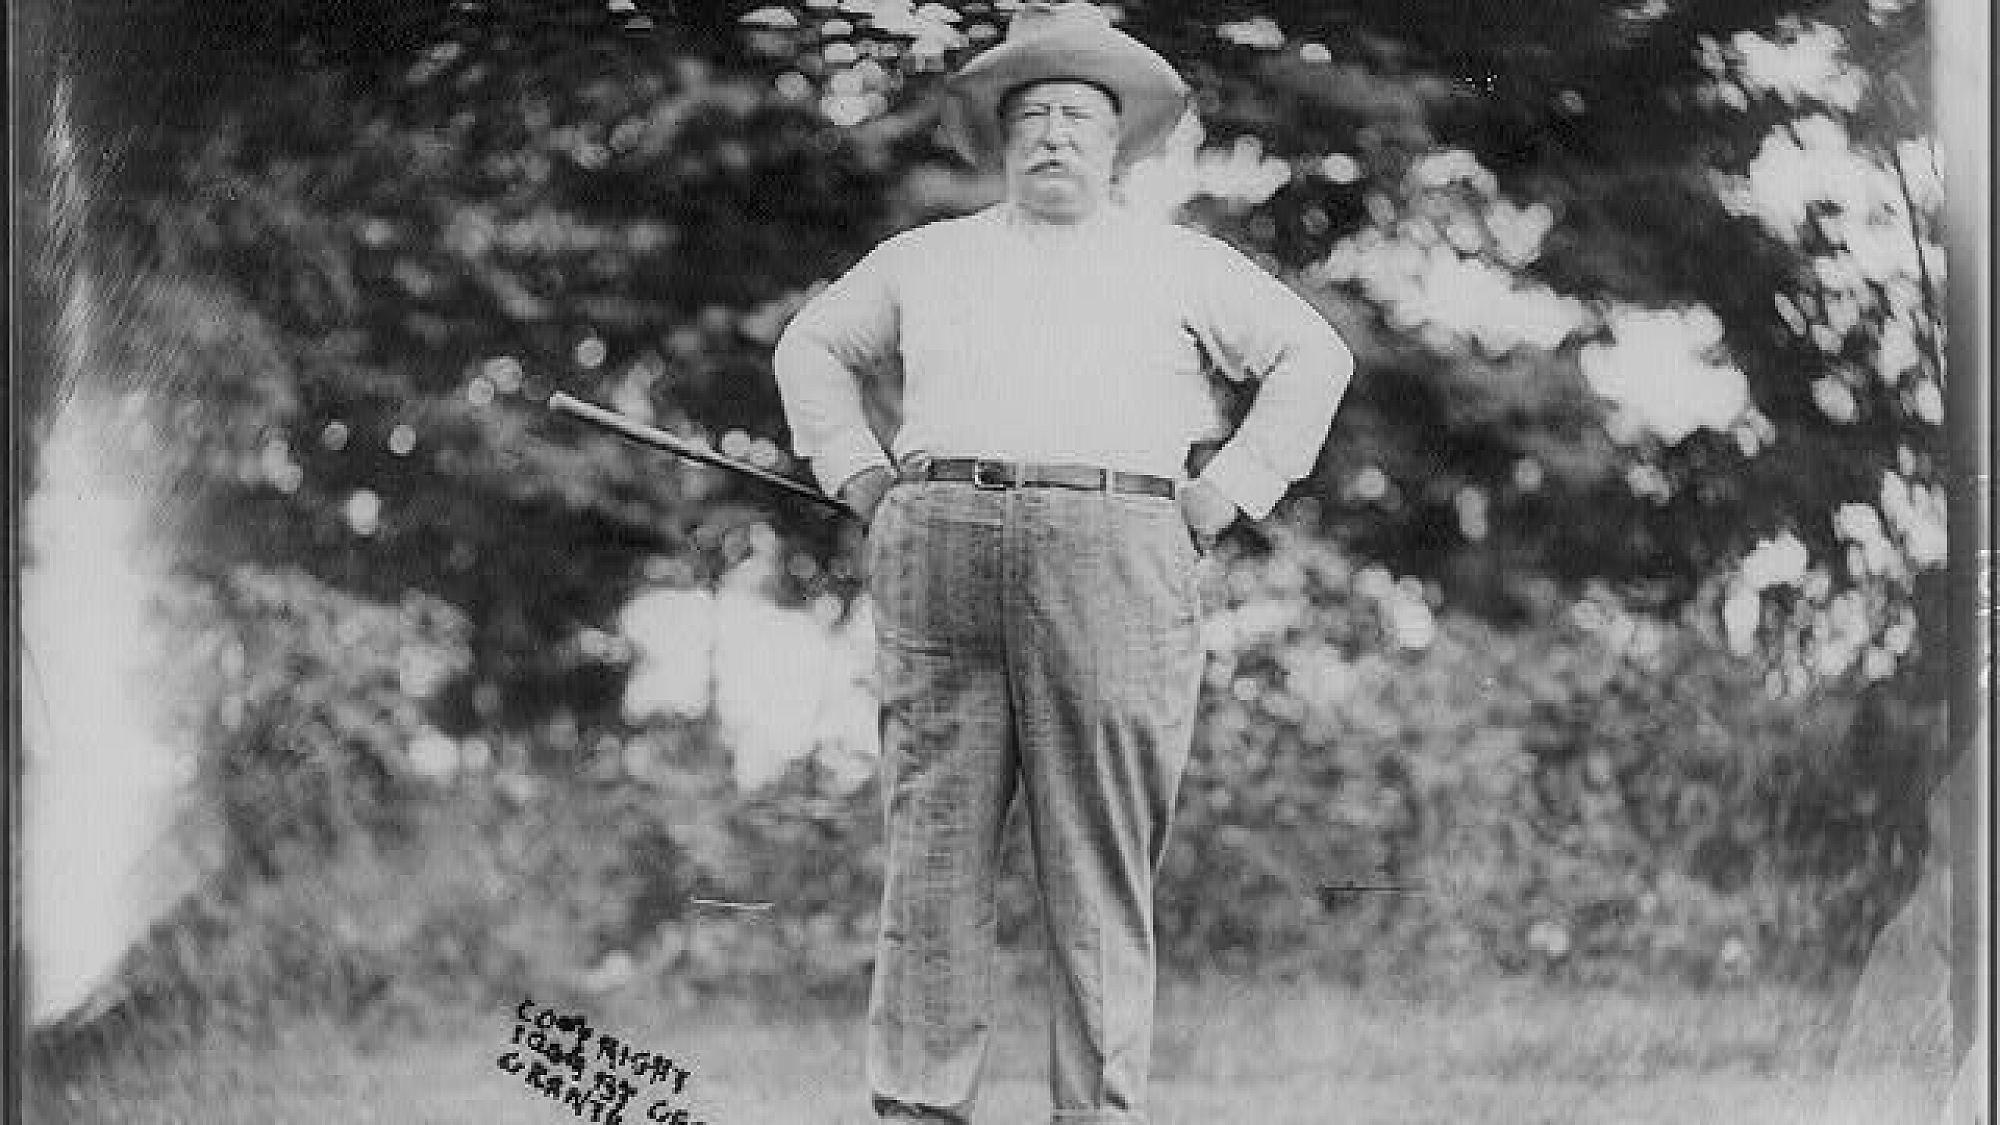 William Howard Taft on golf course